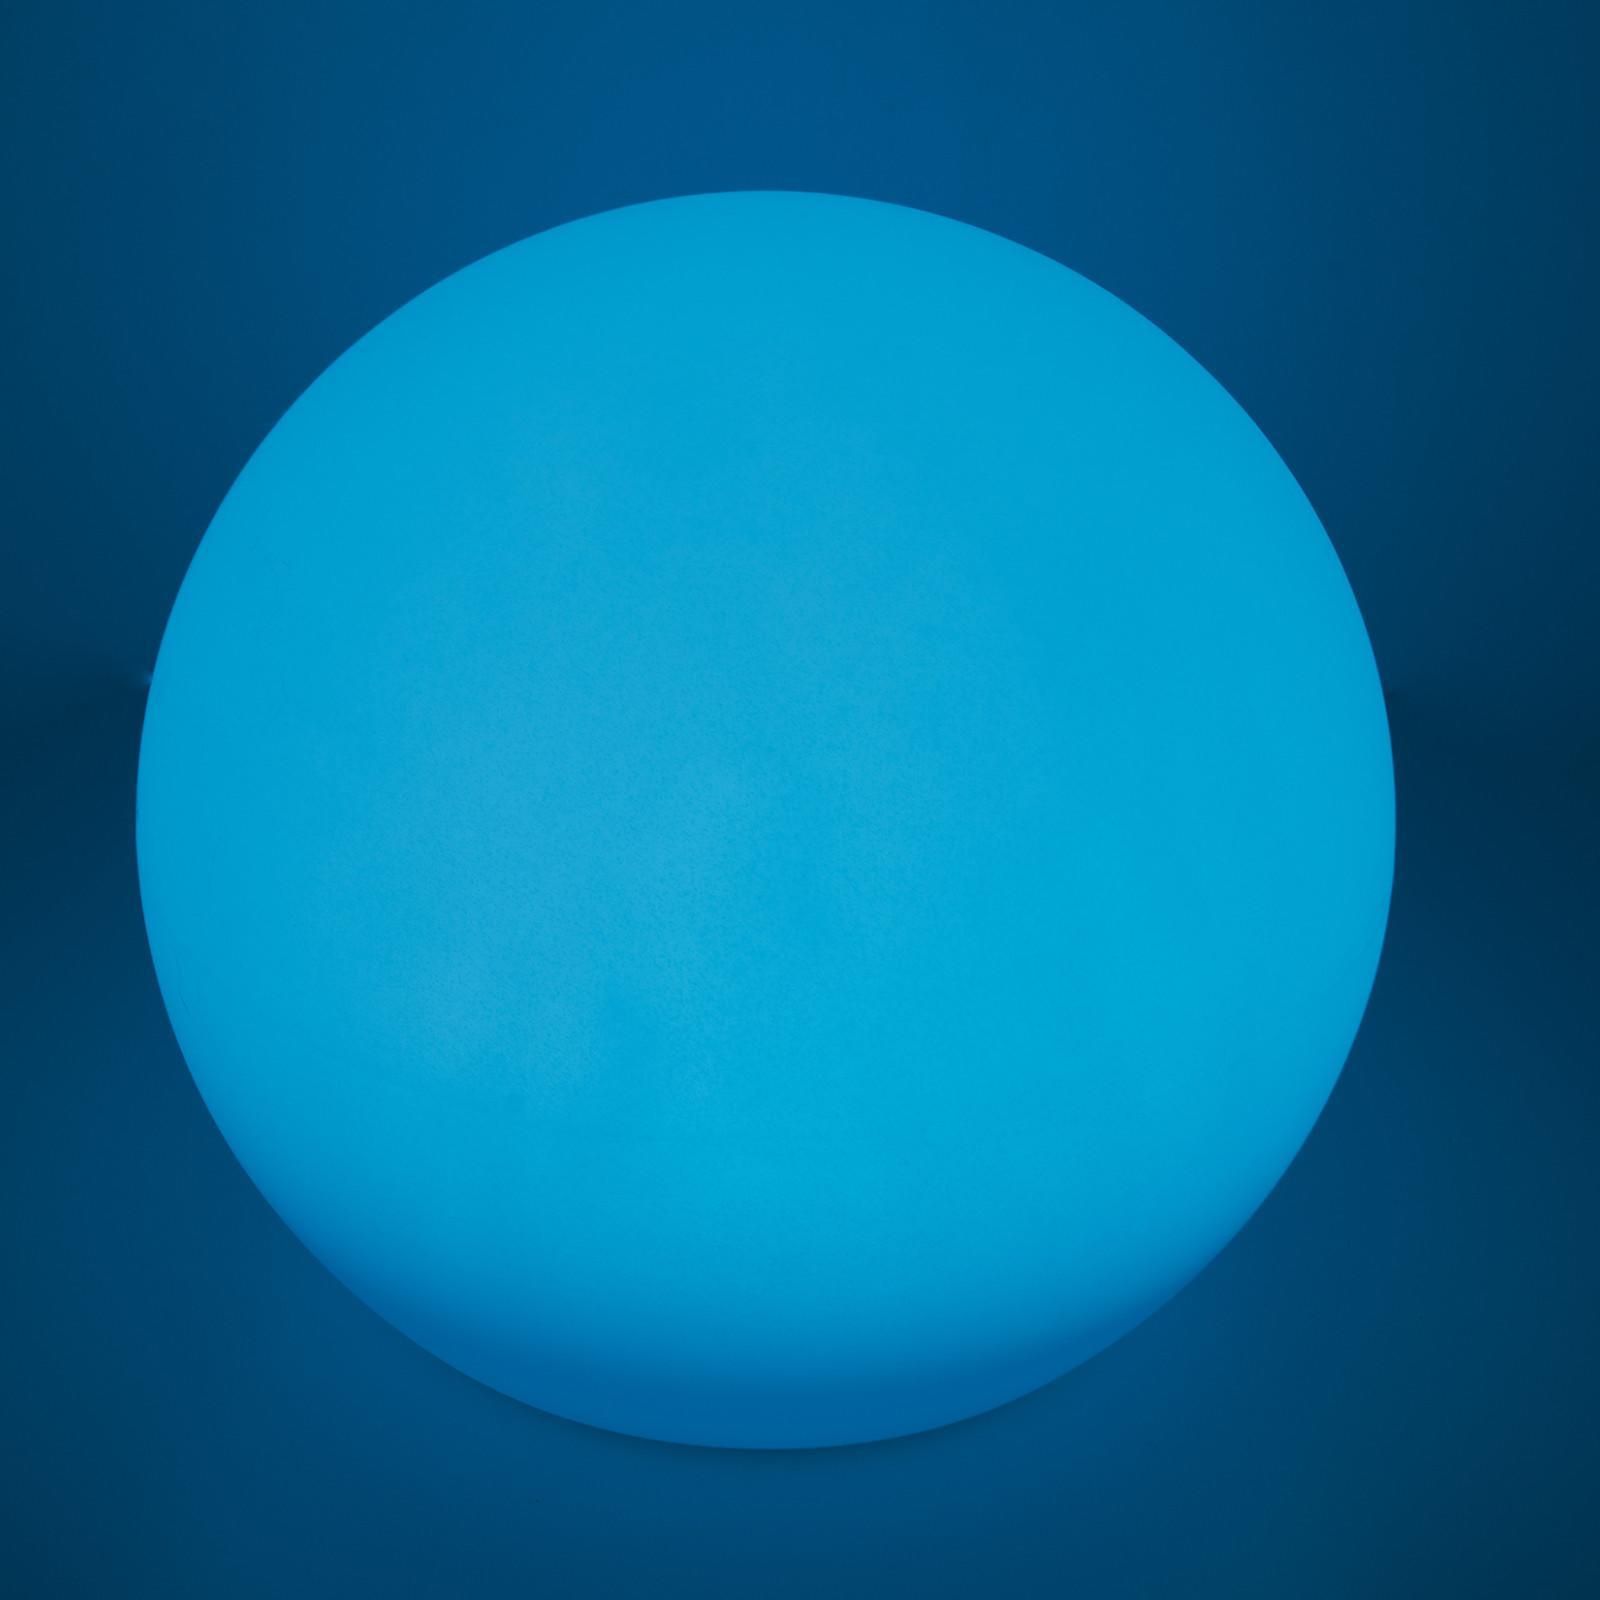 Lampada a sfera LED RGBW per esterno 30cm in polietilene bianca